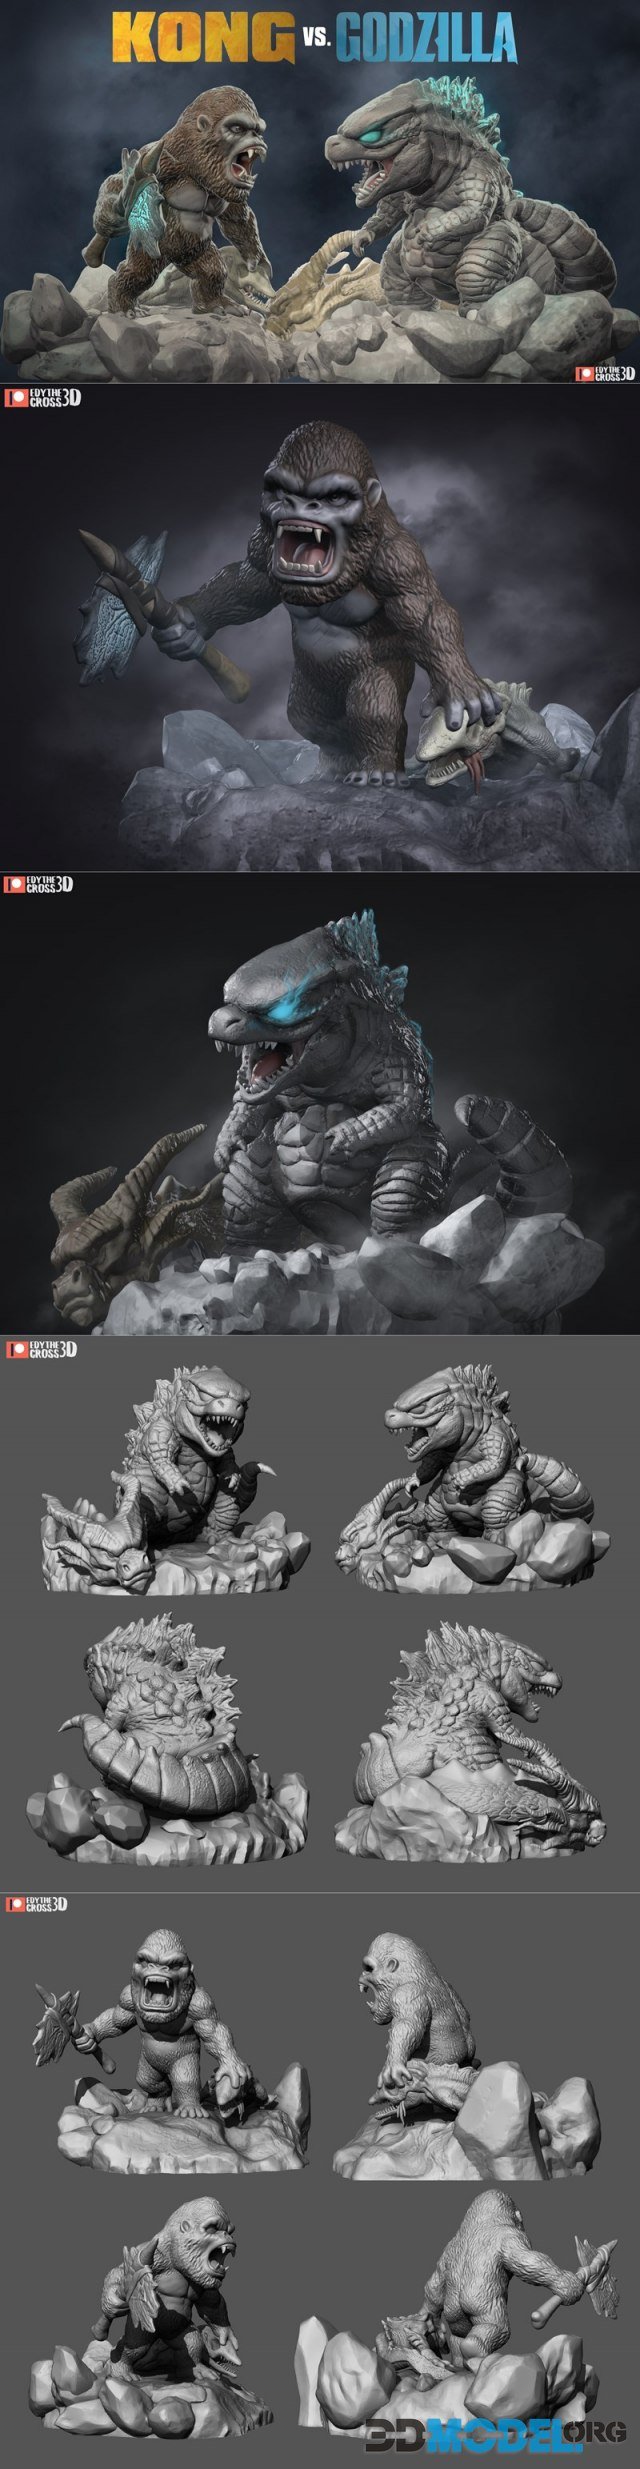 Kong and Godzilla – Printable